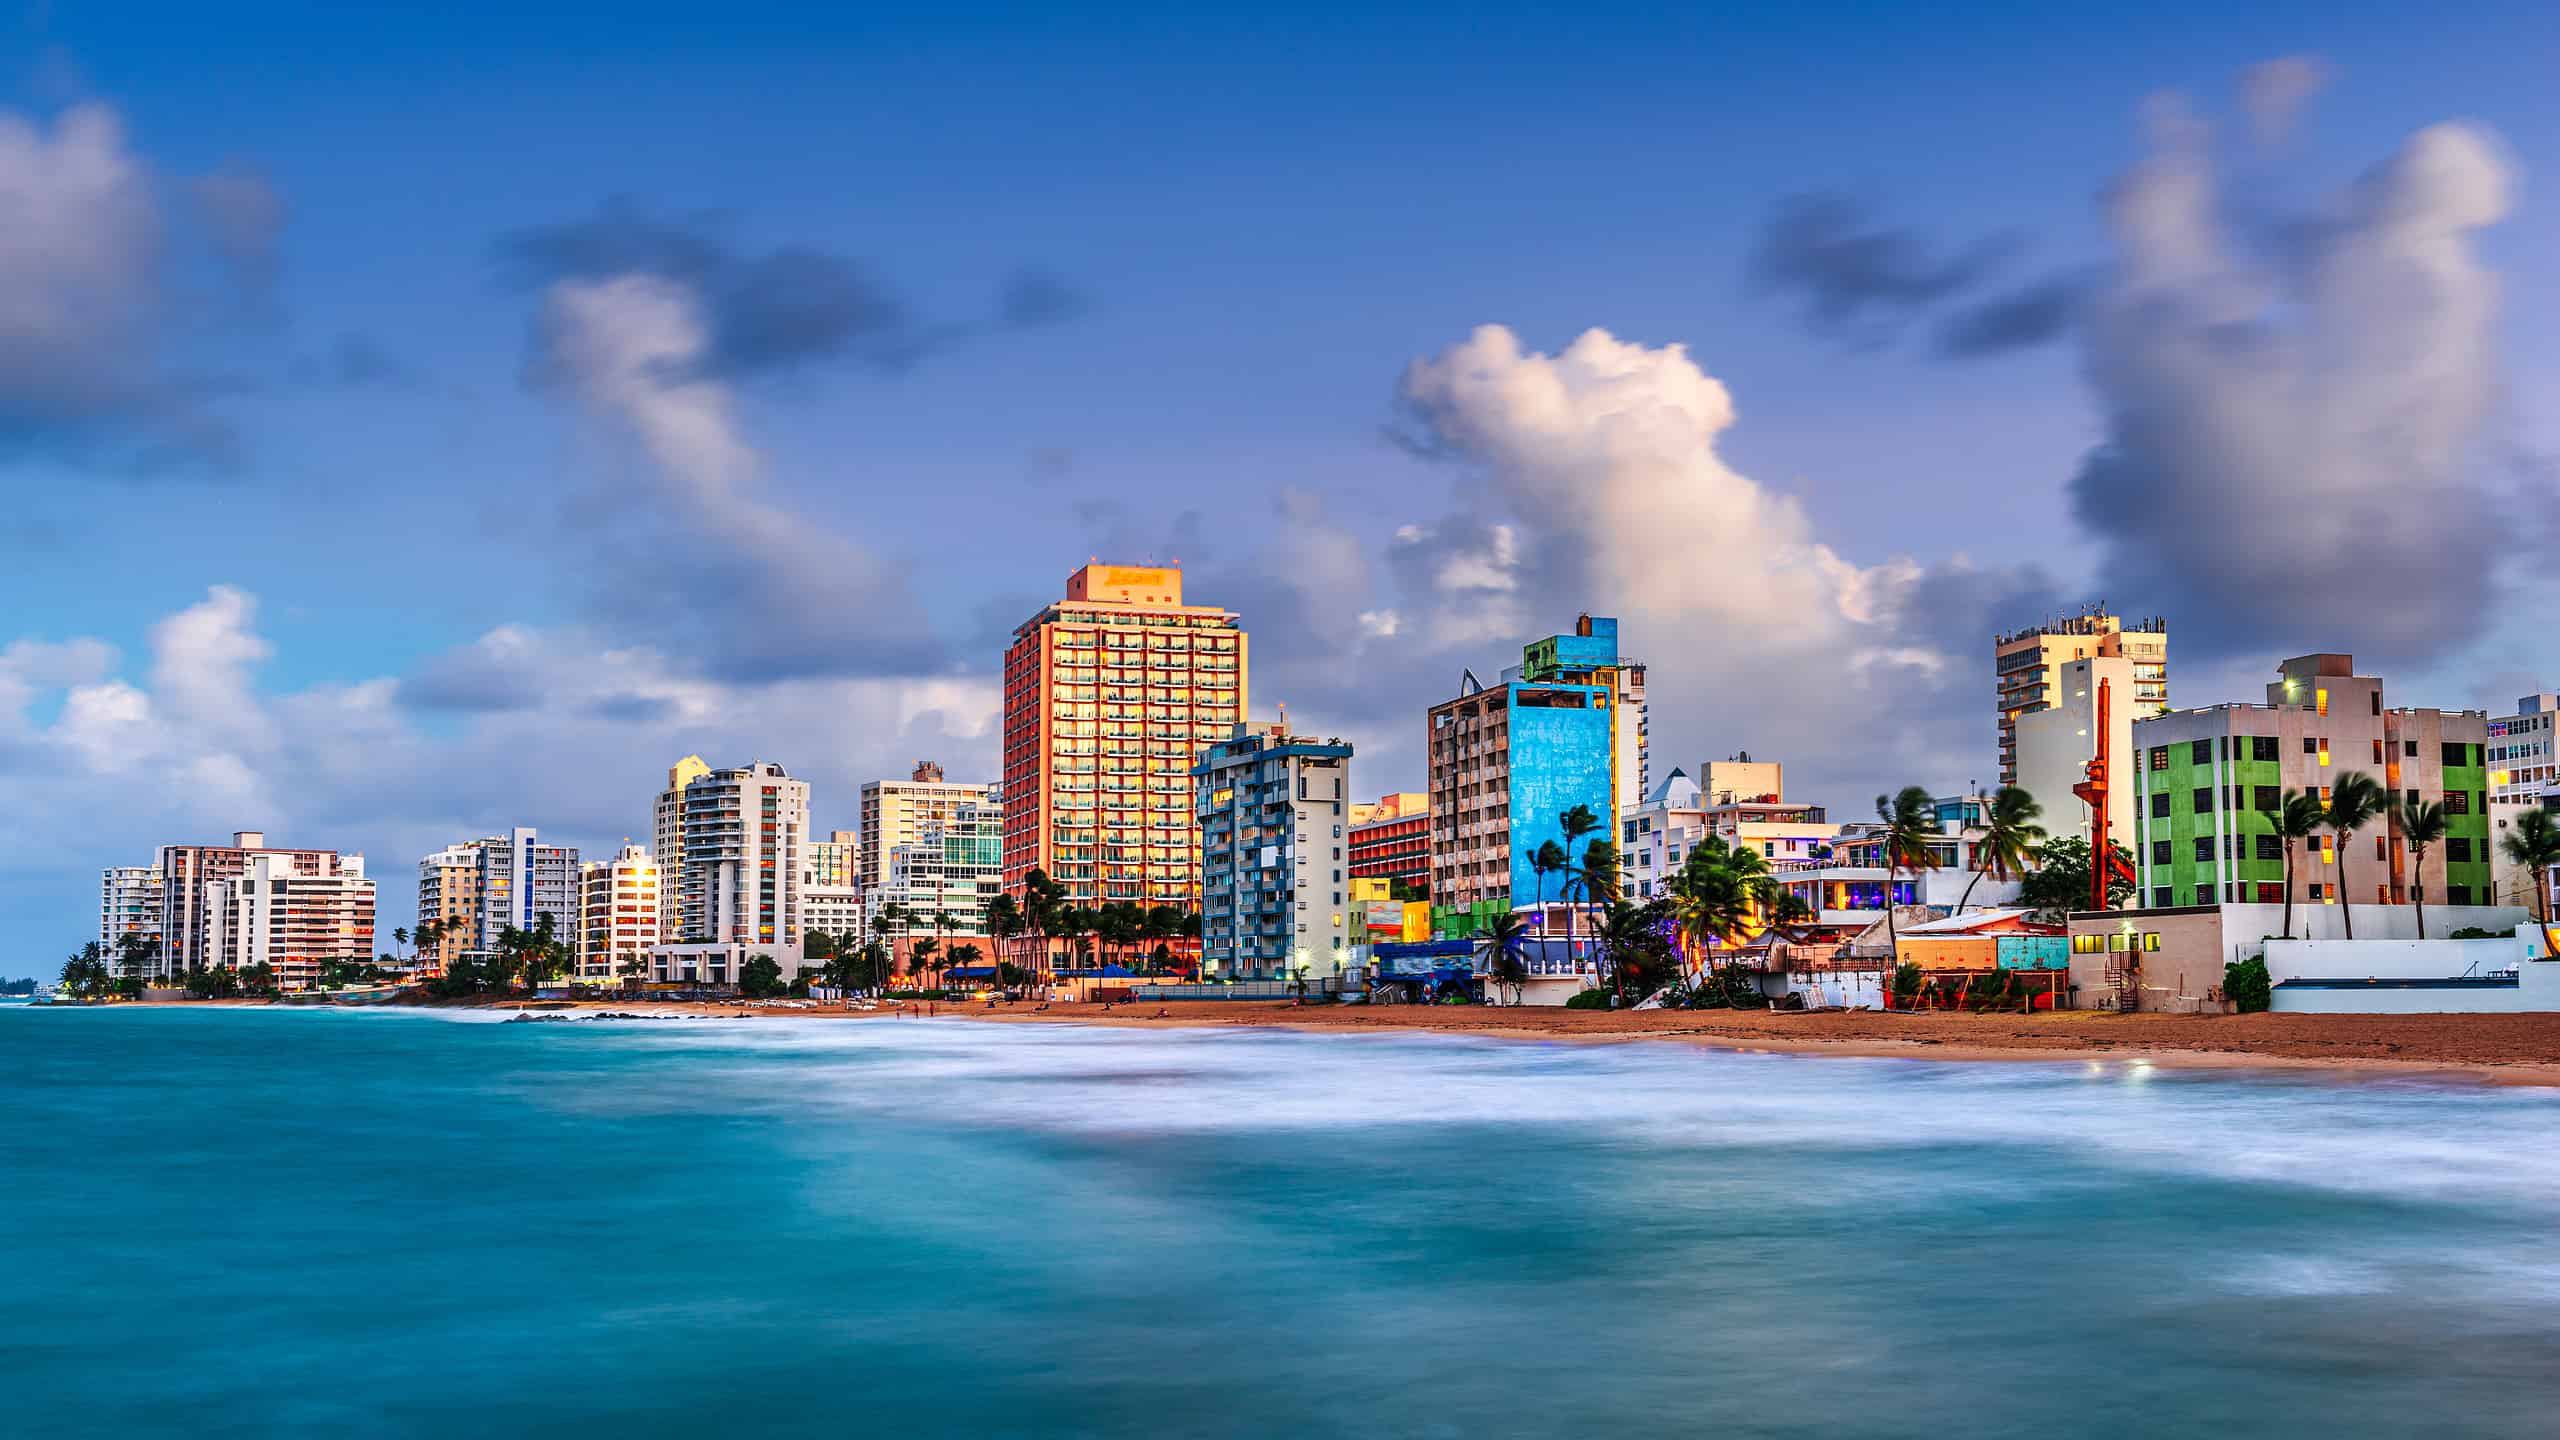 San Juan, Puerto Rico resort skyline on Condado Beach on dusk.